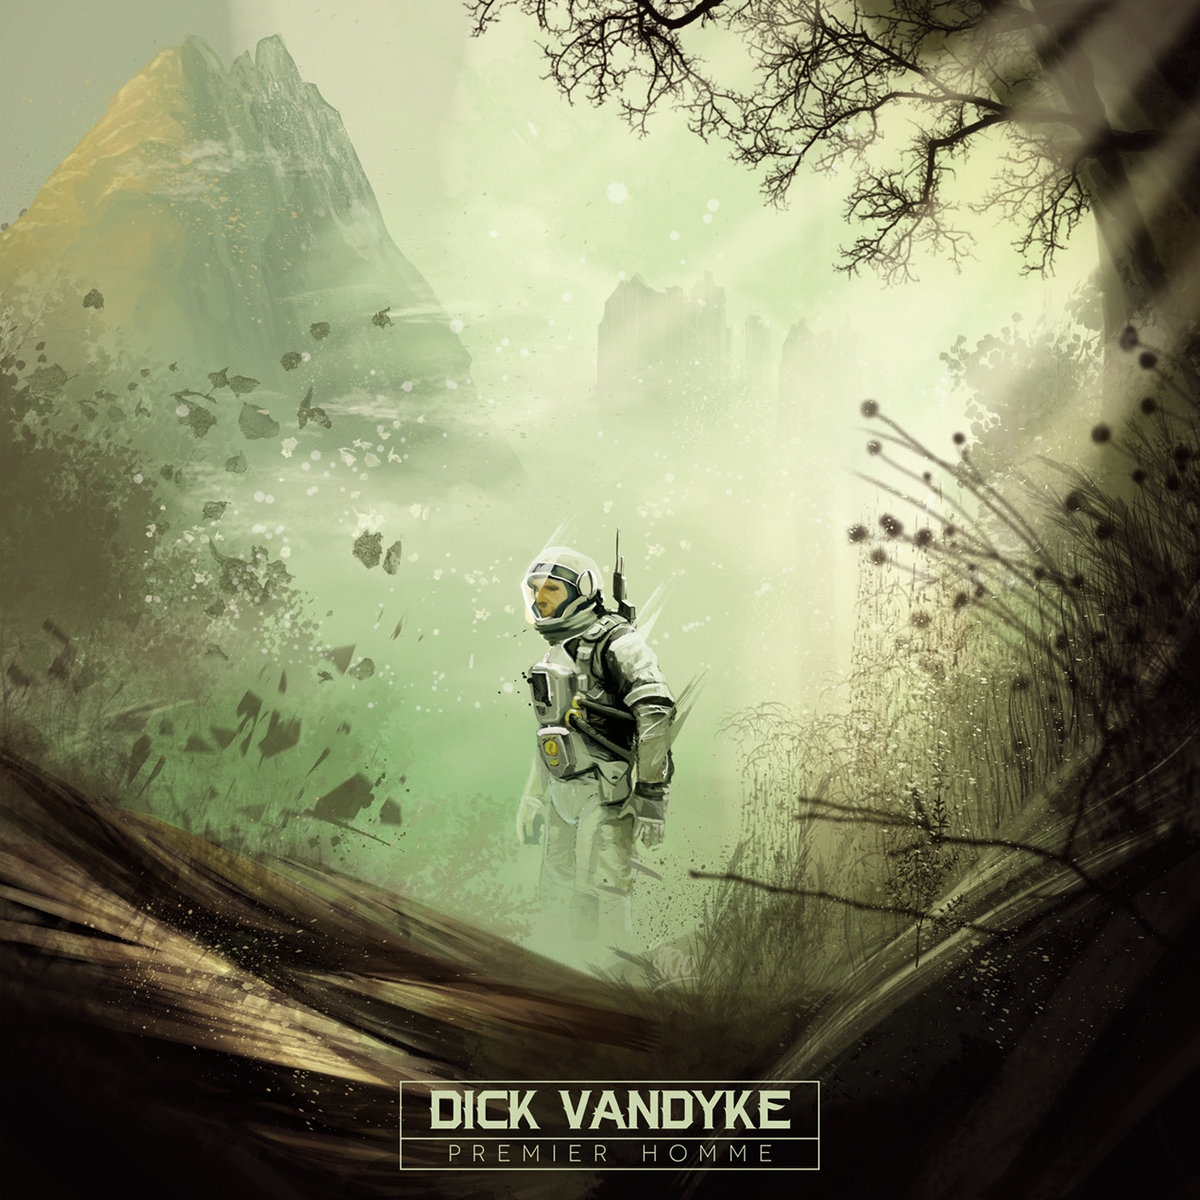 Album Vinyle "Dick Vandyke-- Premier homme" de dick vandyke sur Scredboutique.com